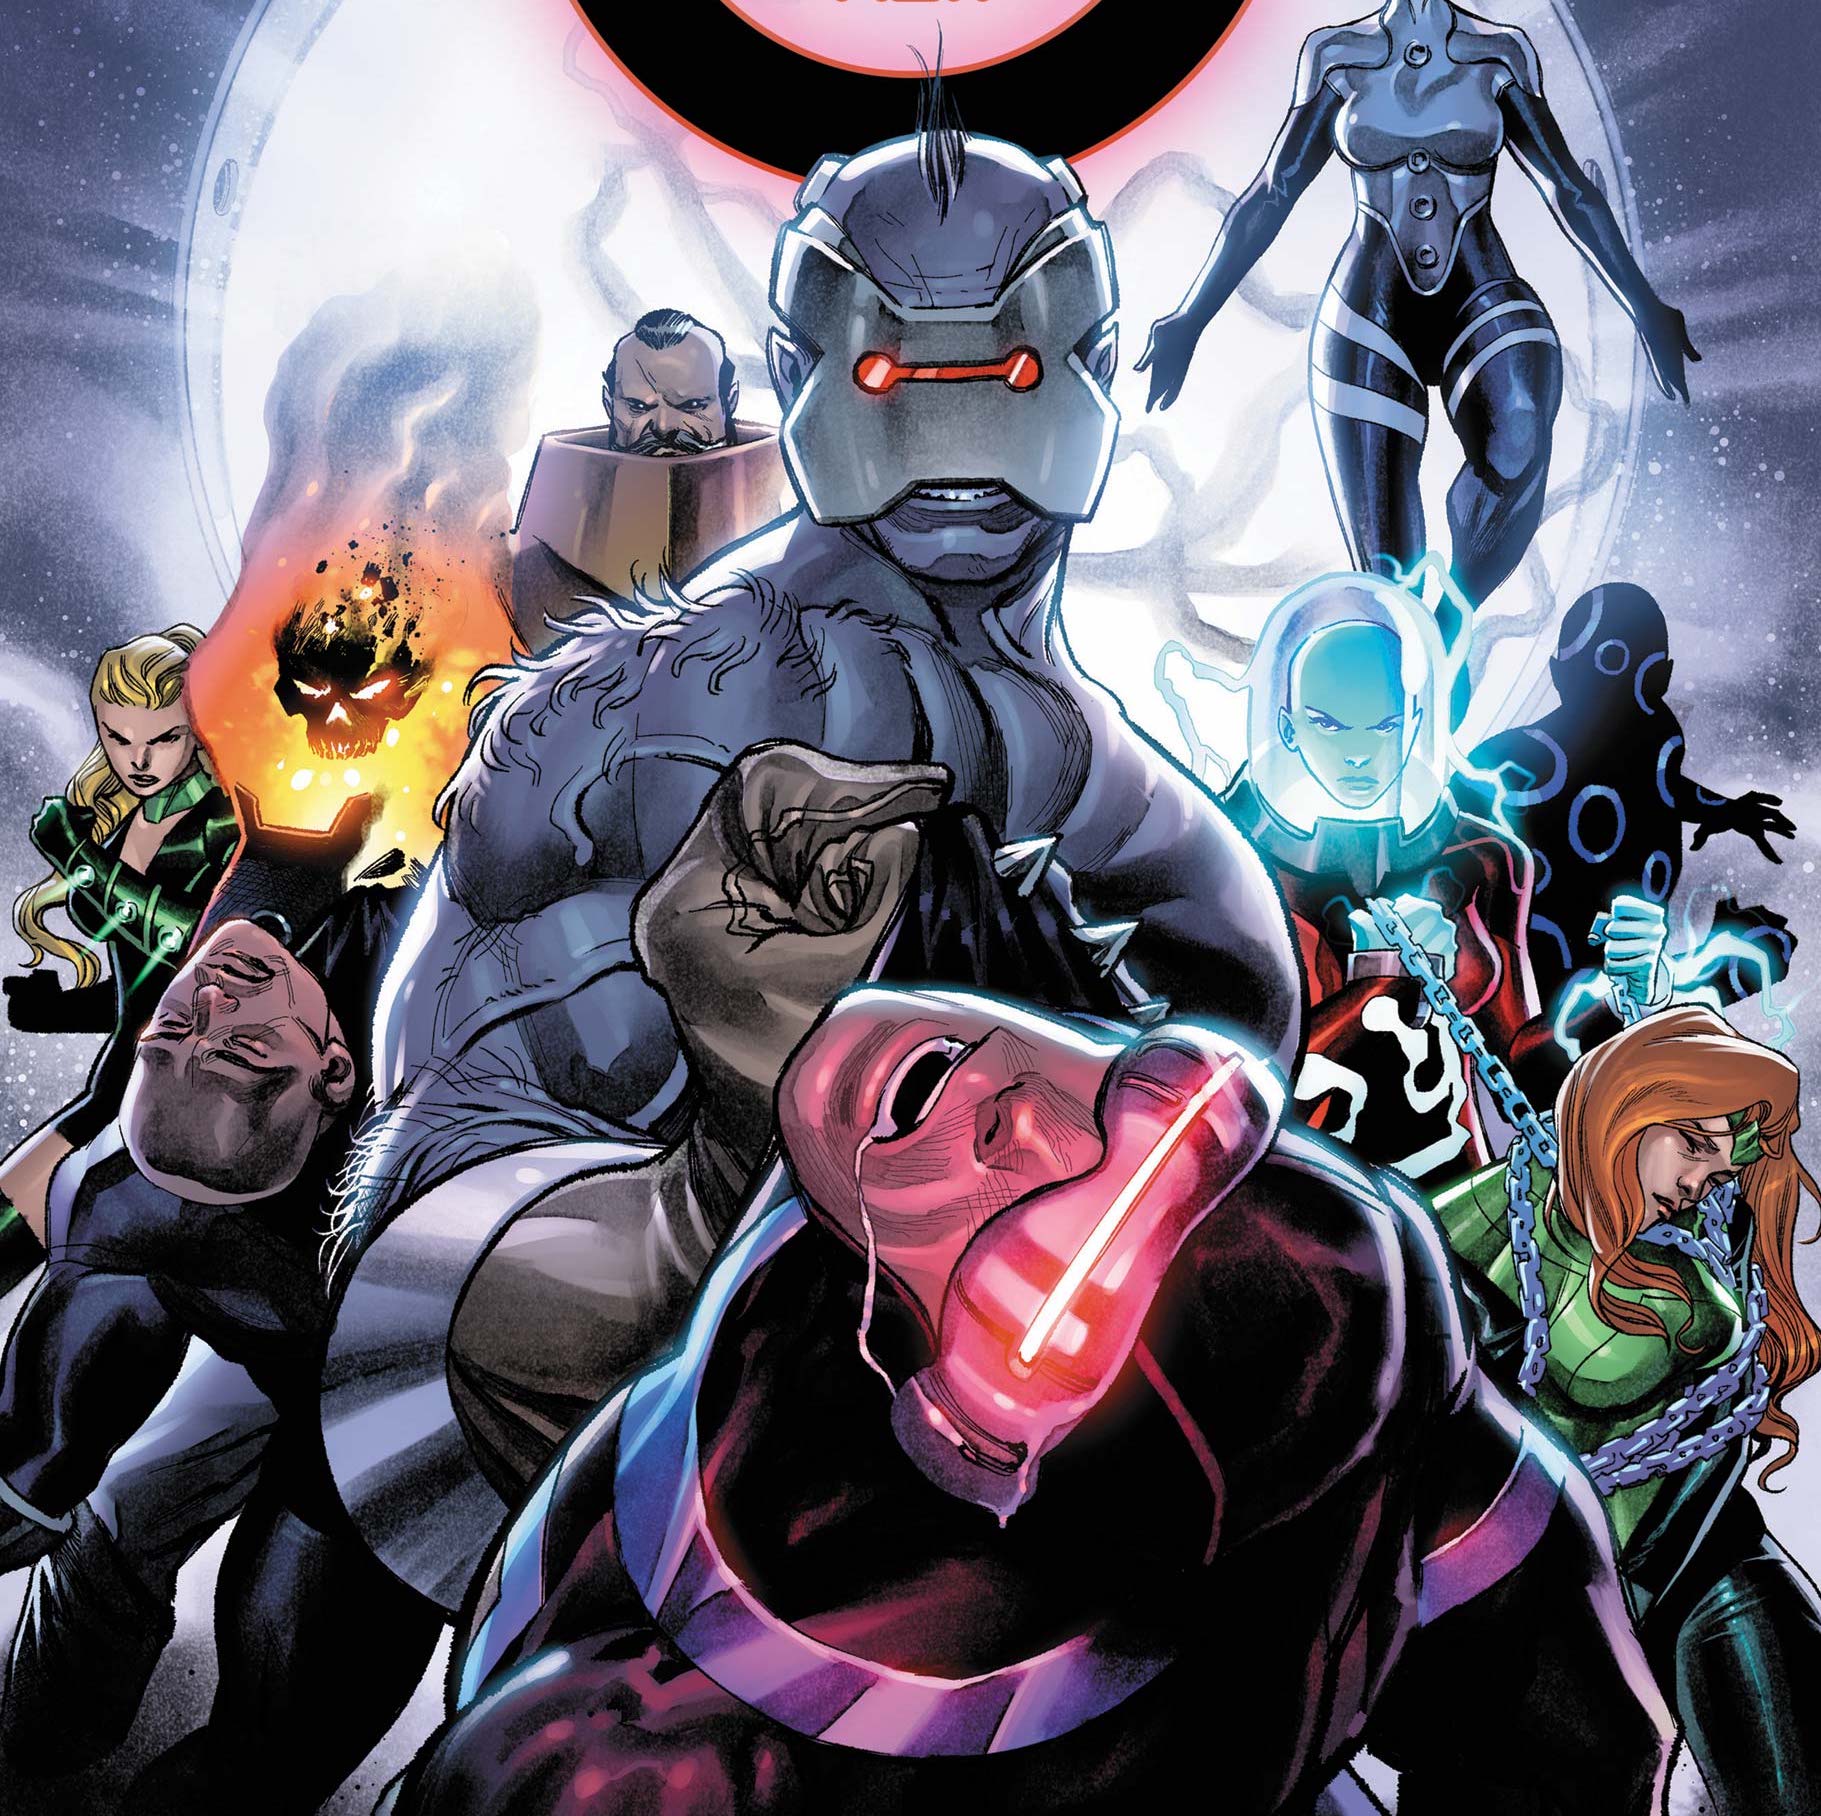 EXCLUSIVE Marvel Preview: X-Men #15